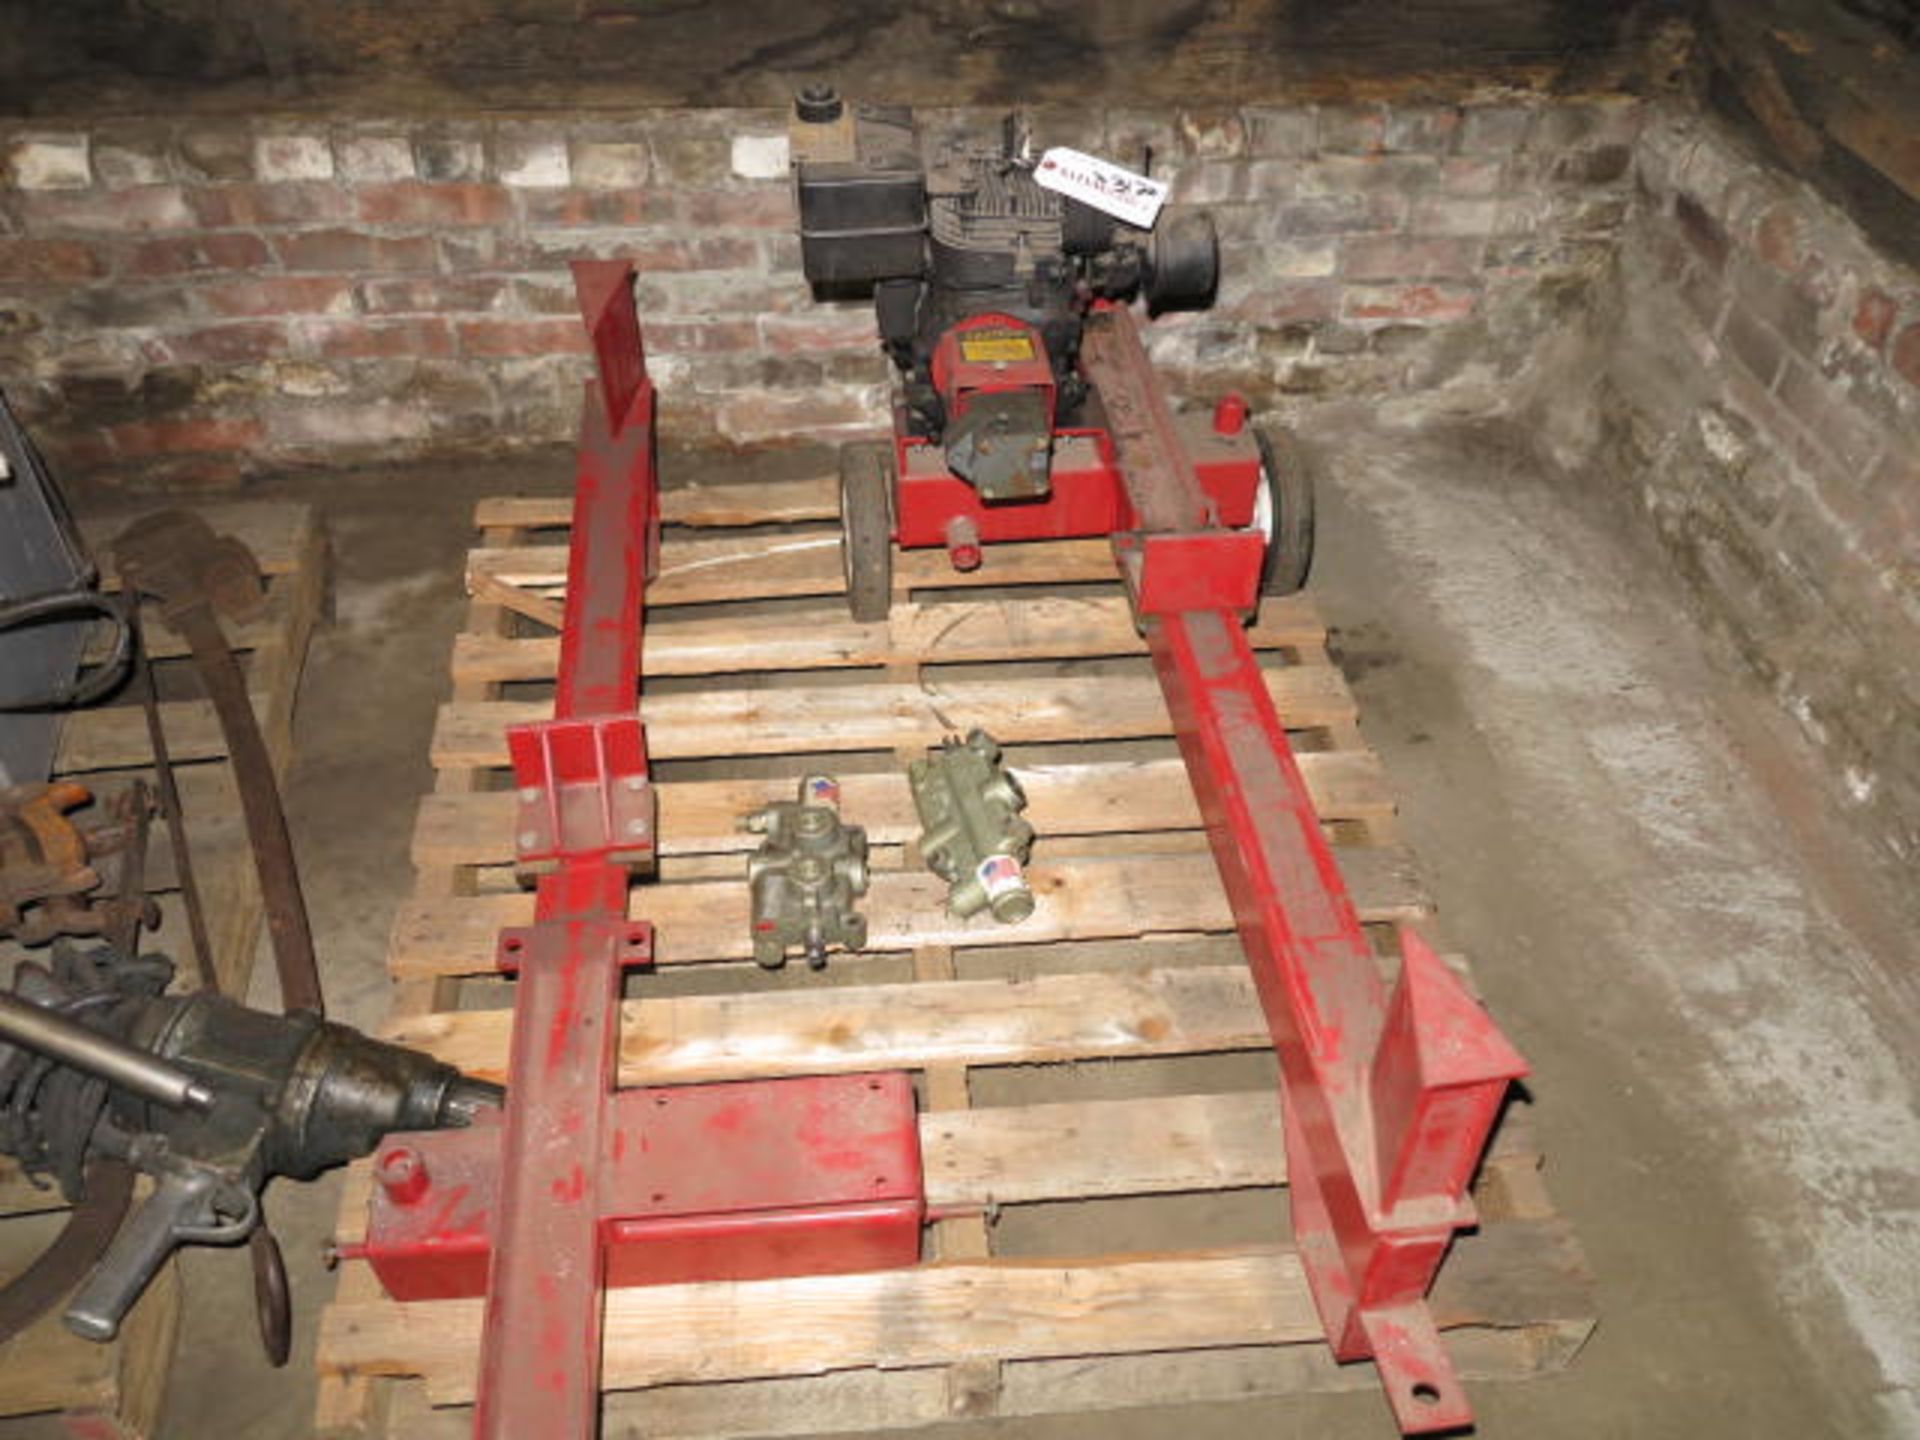 Log Splitter Manifold and Assembly Located at 93 Macondrey St Cumberland, RI